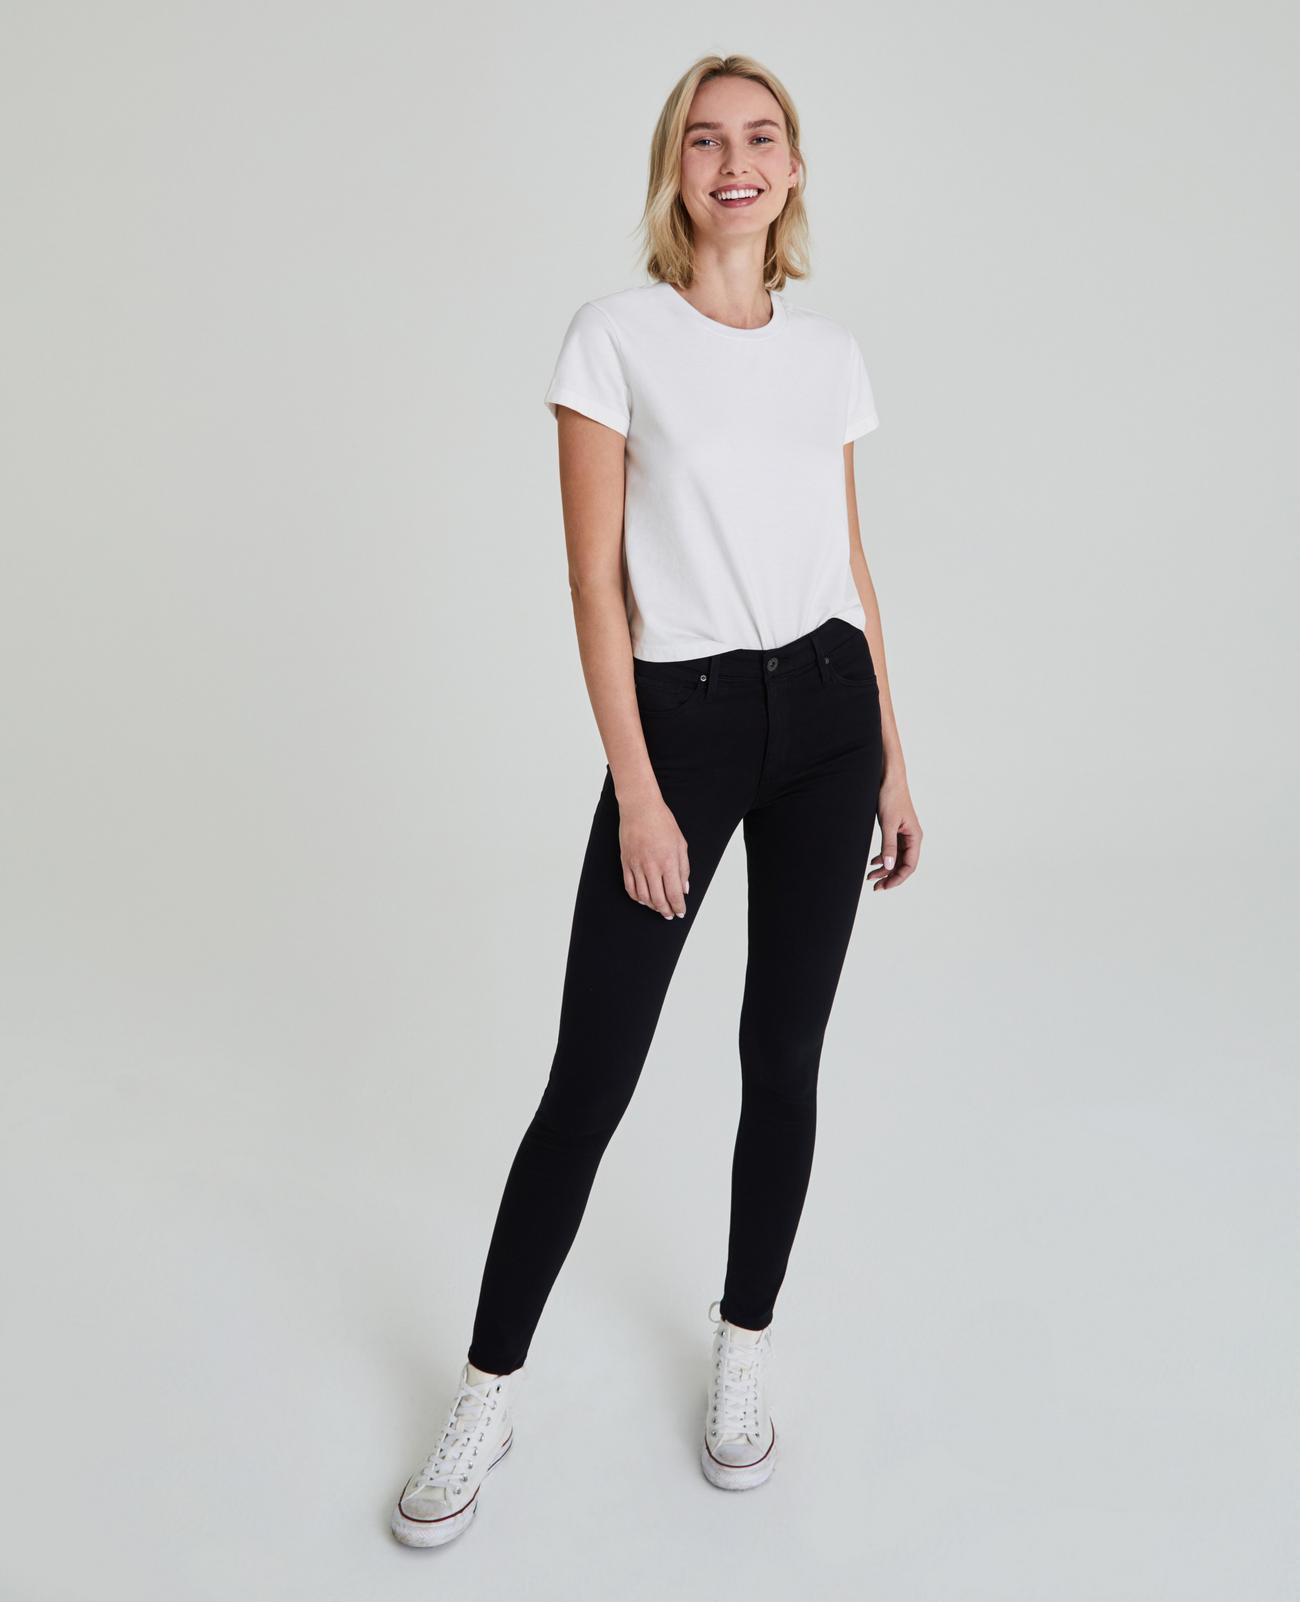 Farrah Mid Rise Skinny Jean - Black - AG Jeans Canada - Danali